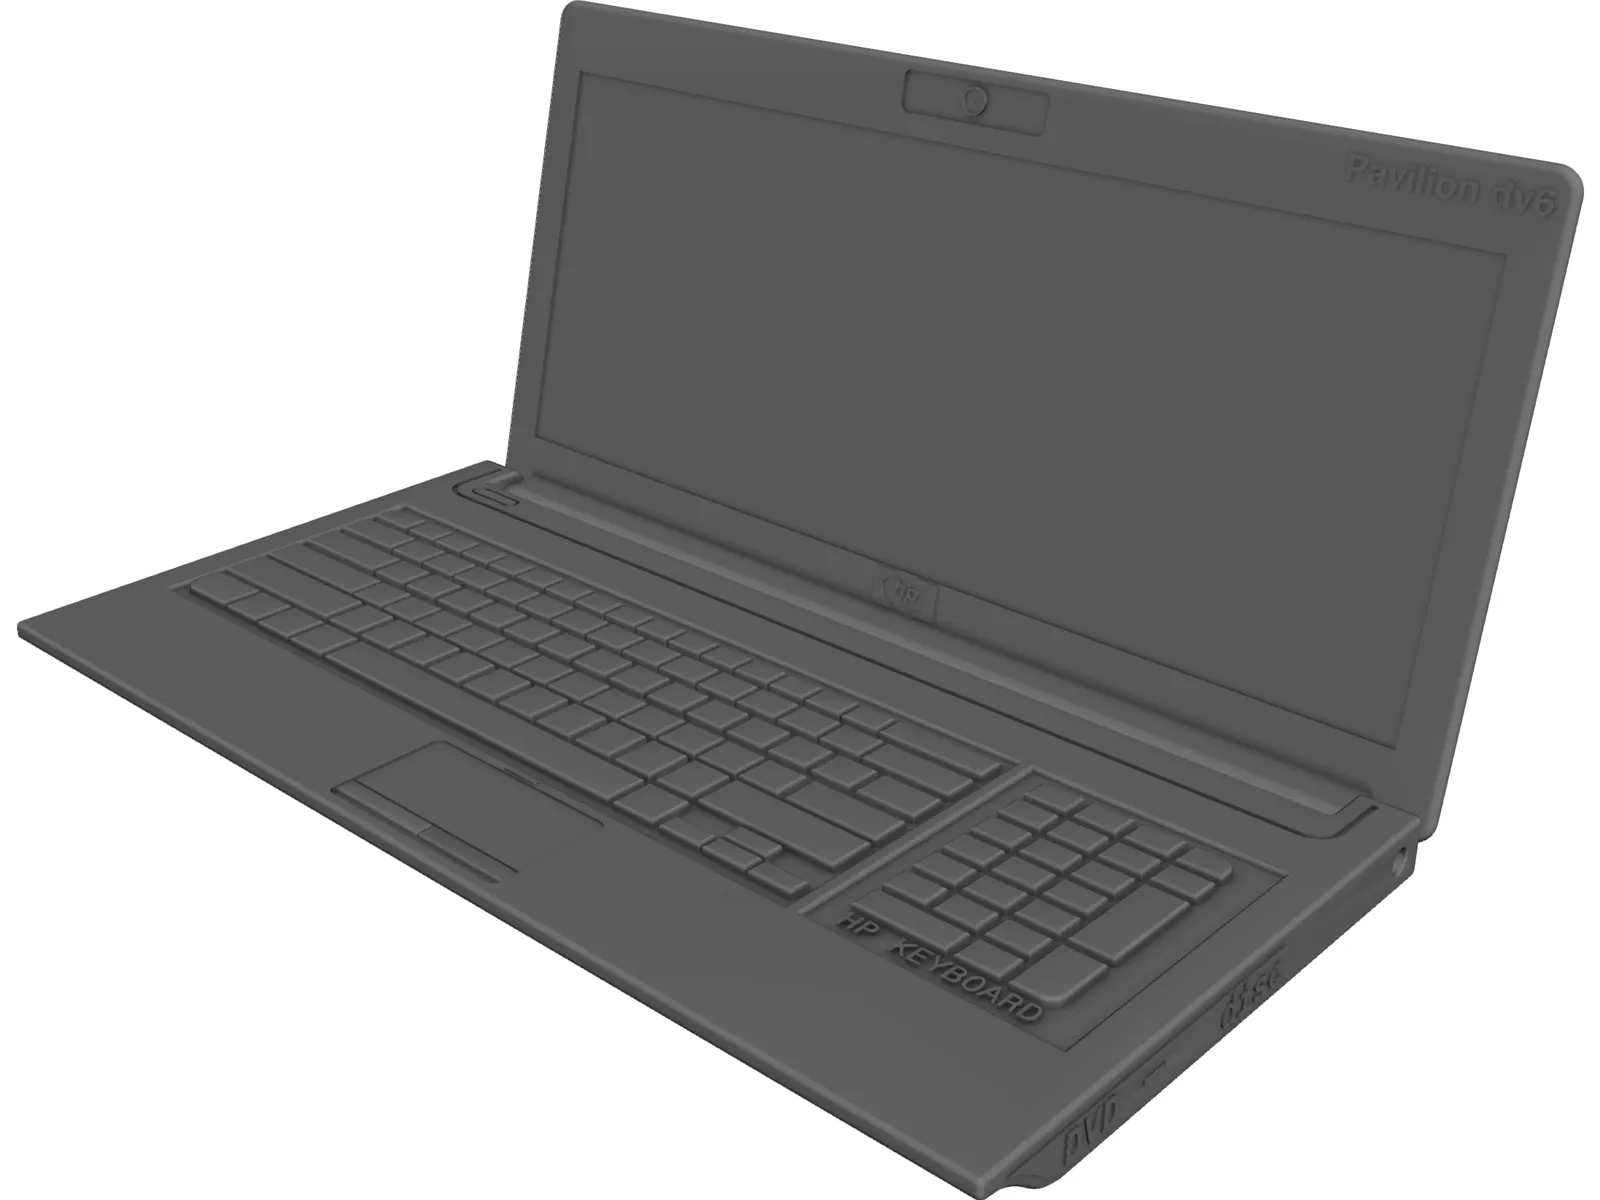 HP Laptop Pavilion dv6 3D Model